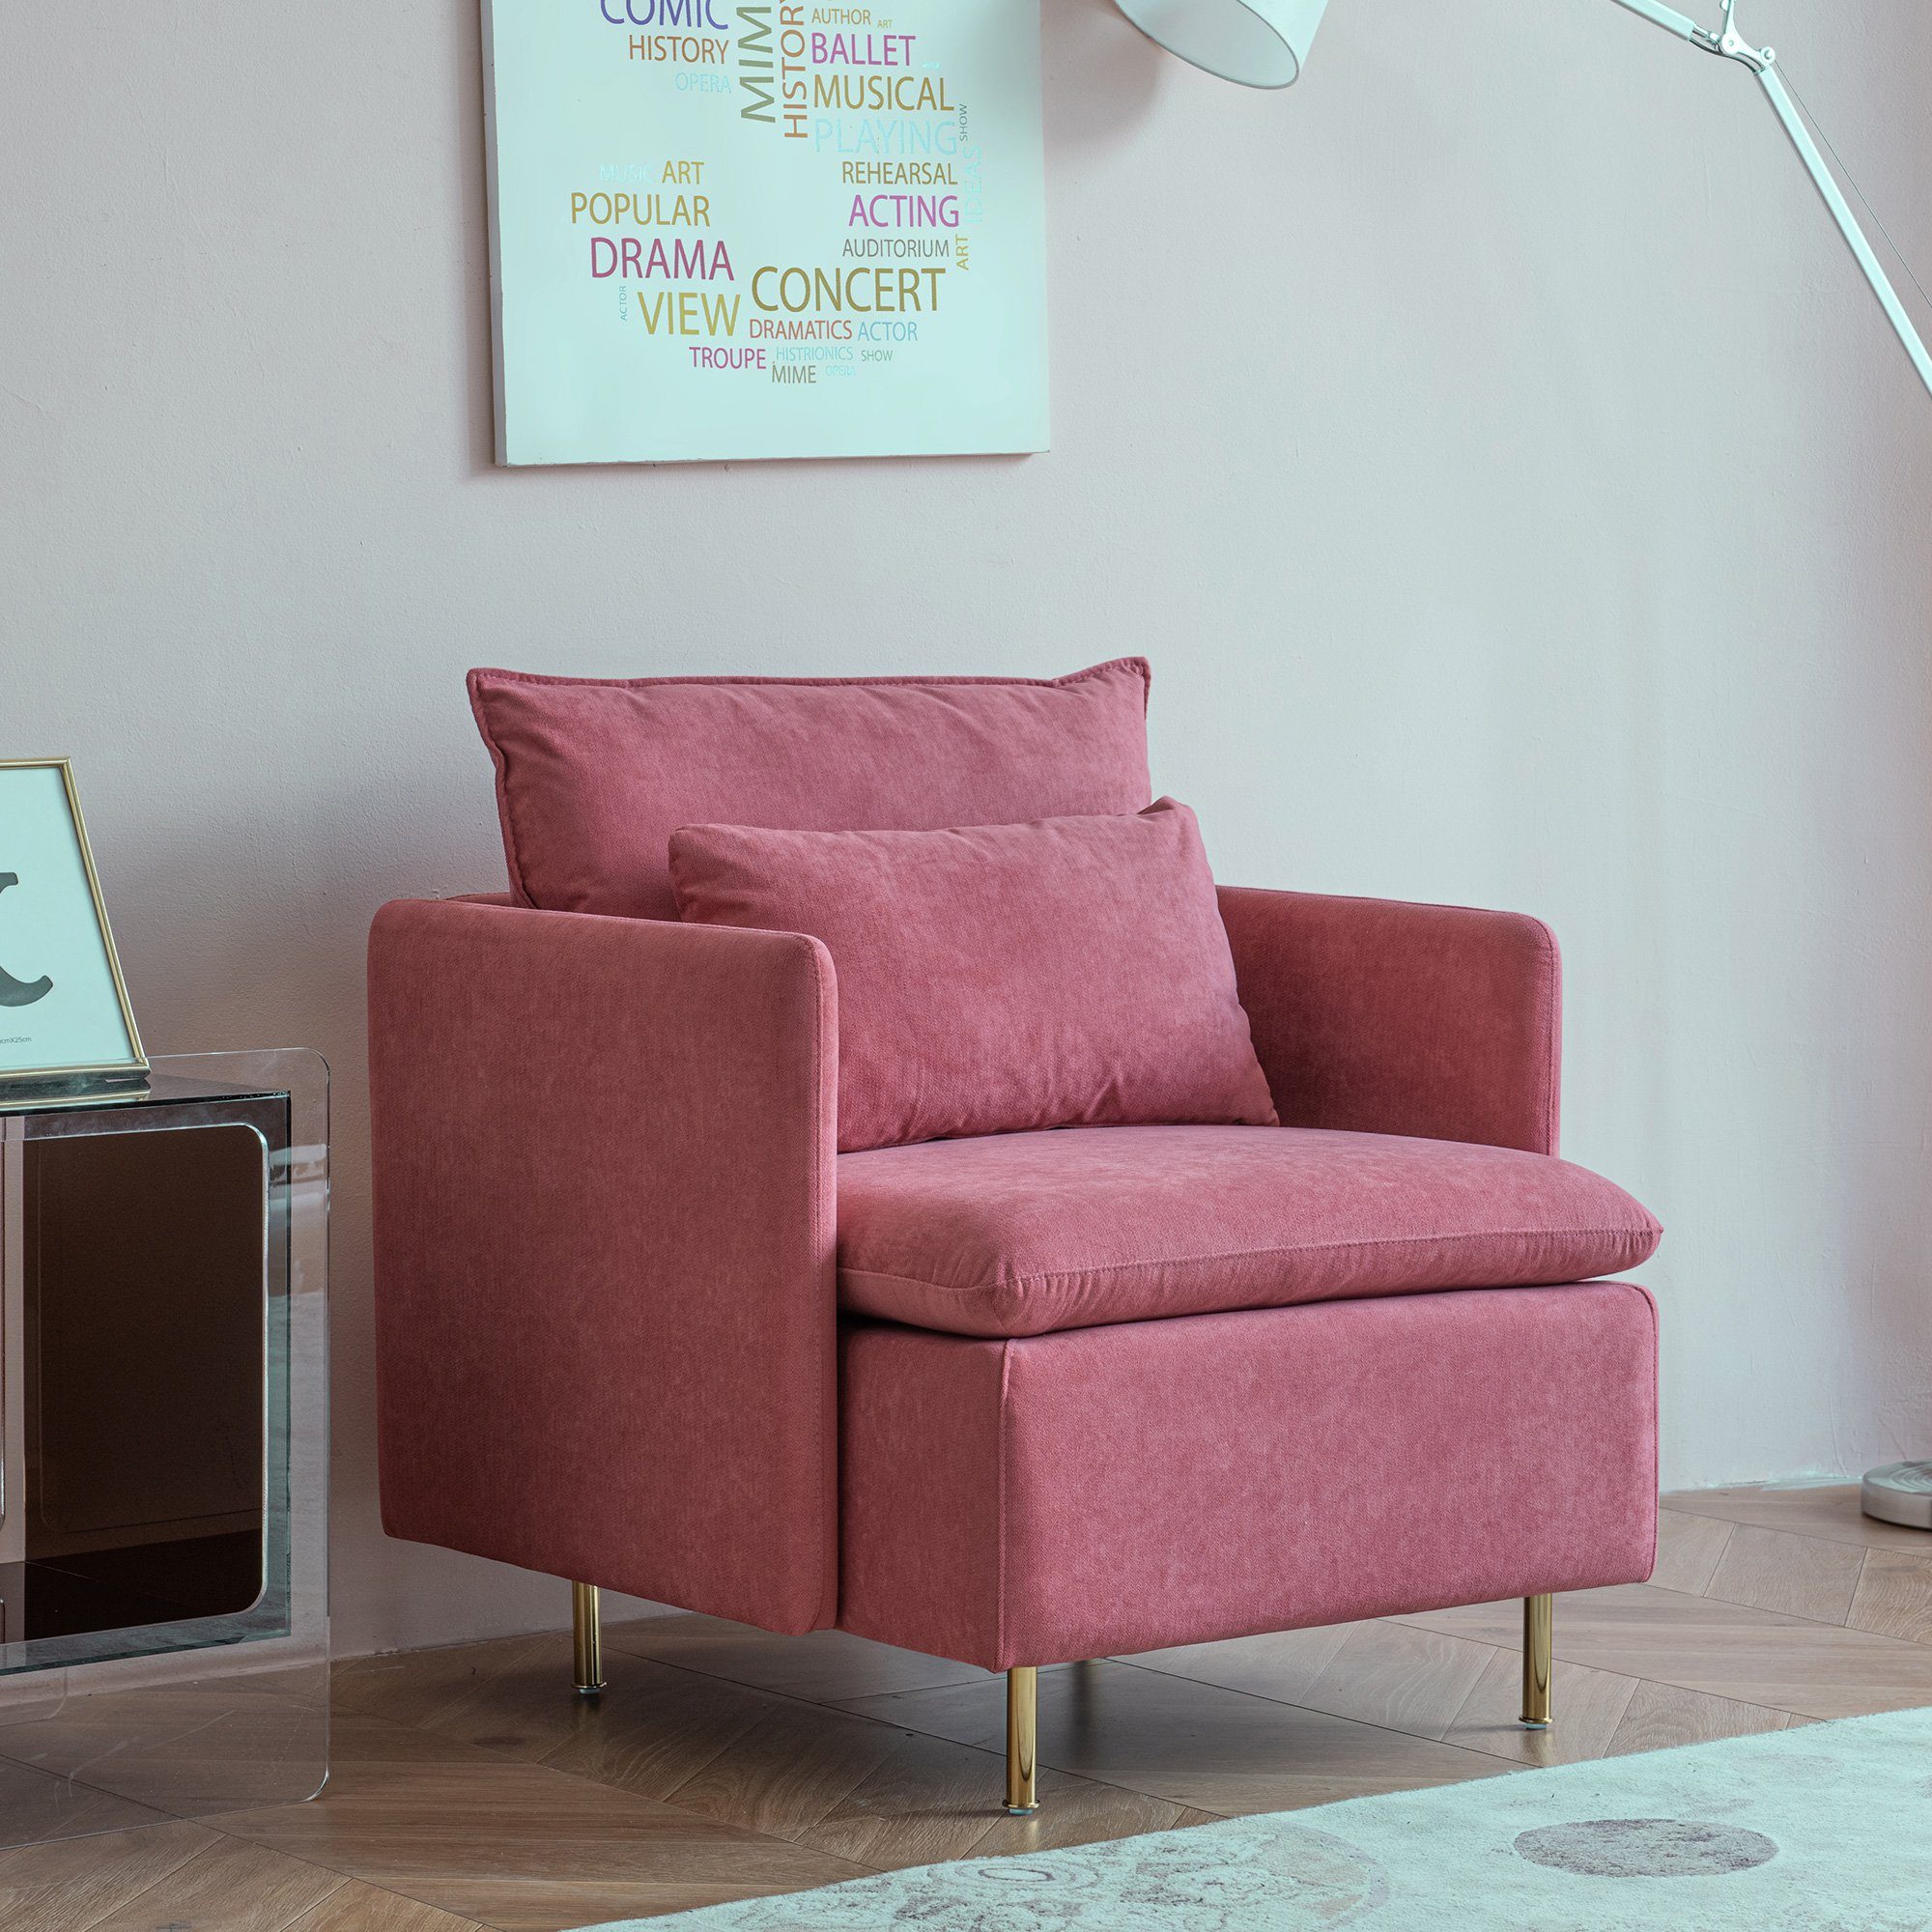 Weinrot gepolsterter Odikalo Farbe Modern Sofa Einzelsofa Sessel, mehrere Baumwollleinen,